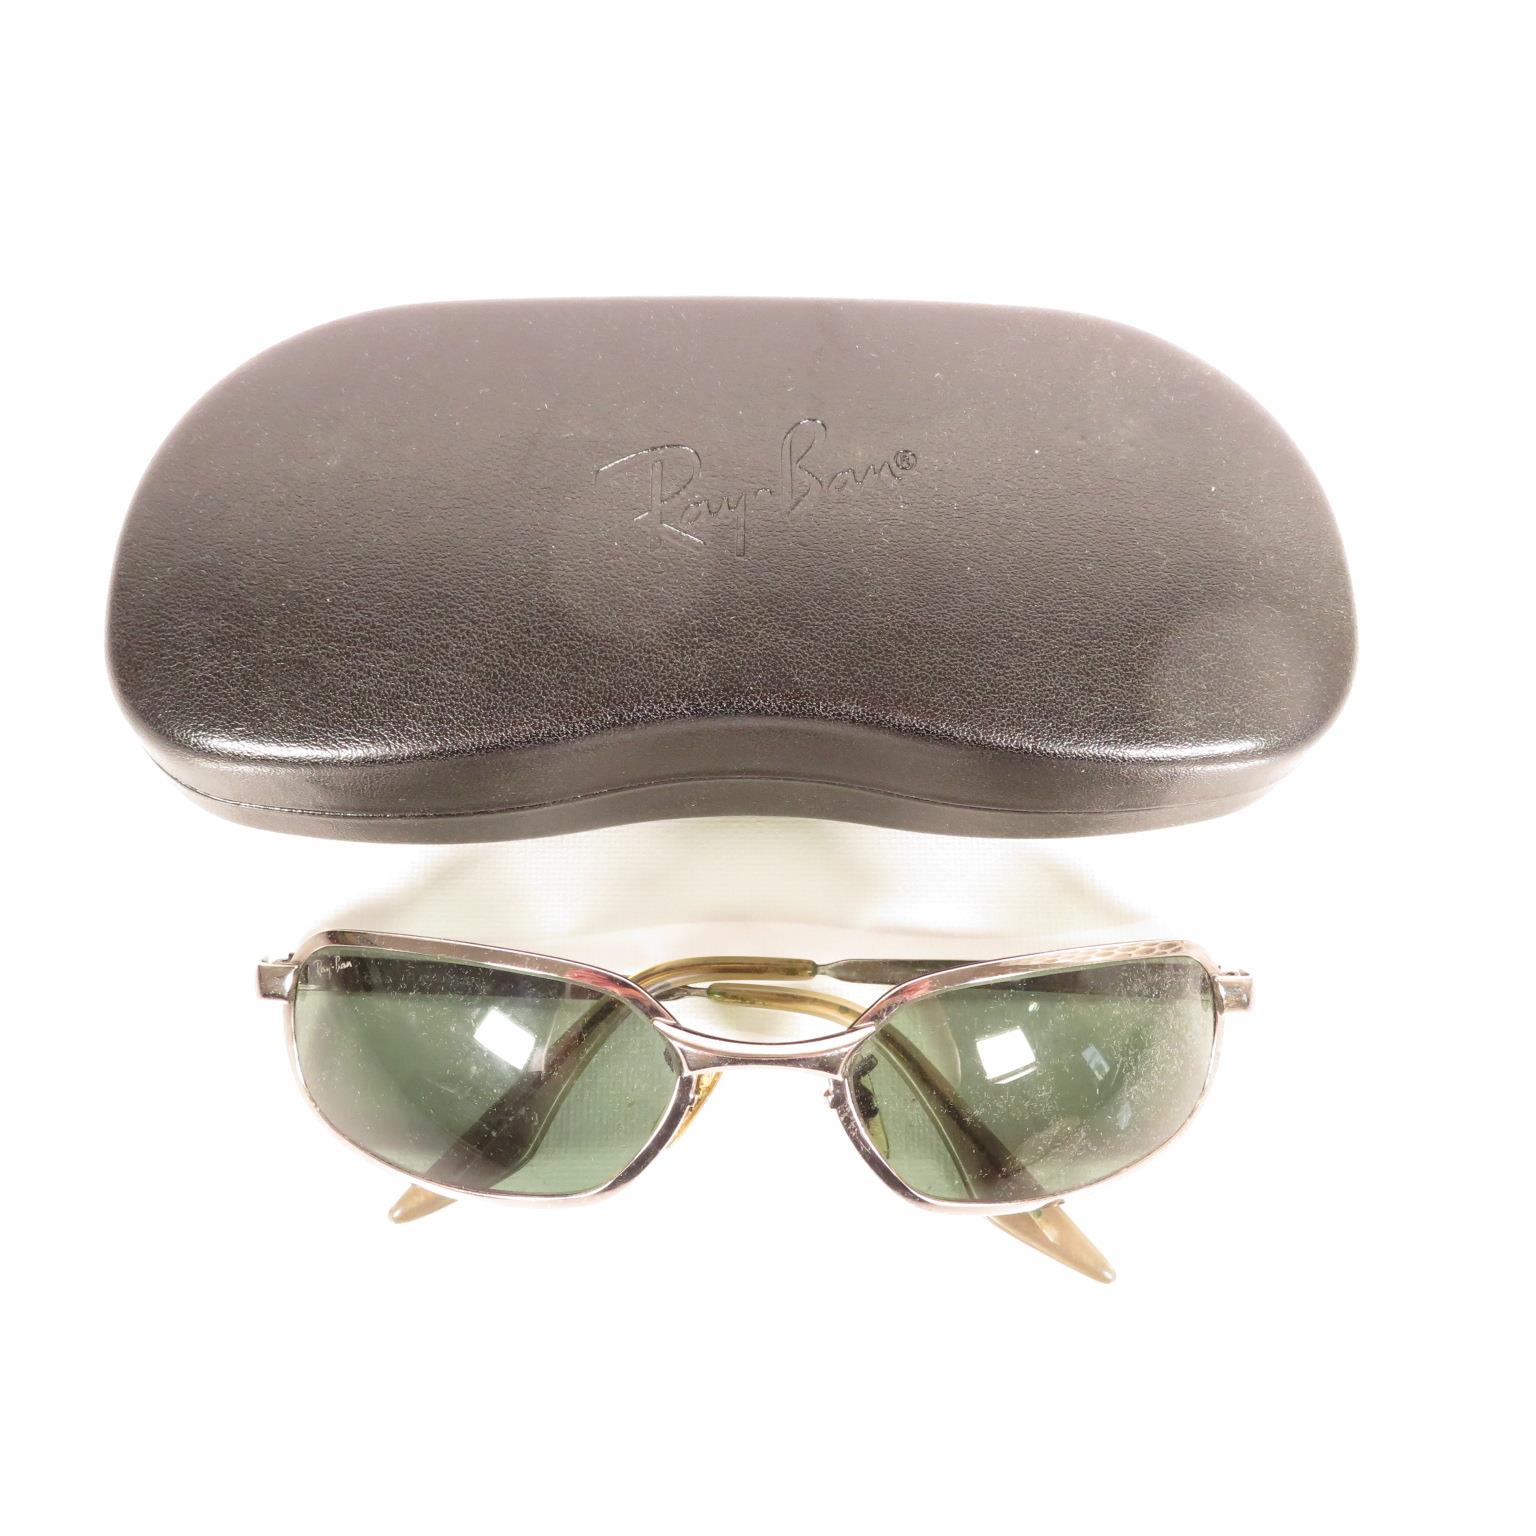 5x sets of Ray Ban sunglasses - - Image 10 of 23